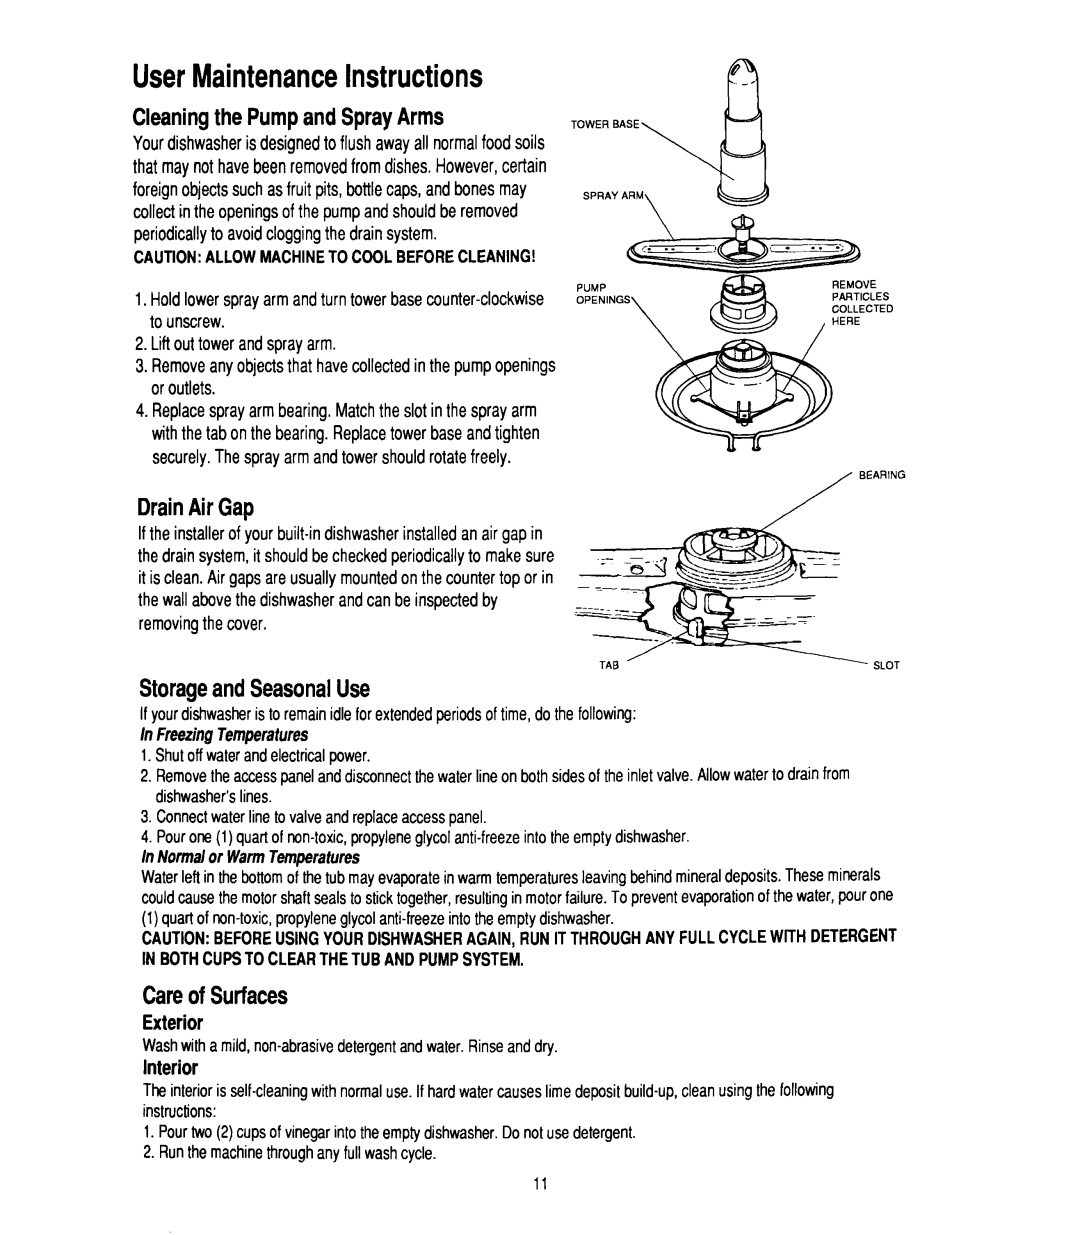 Whirlpool W10142816B manual UserMaintenanceInstructions, CleaningthePumpandSprayArms, DrainAirGap, StorageandSeasonalUse 